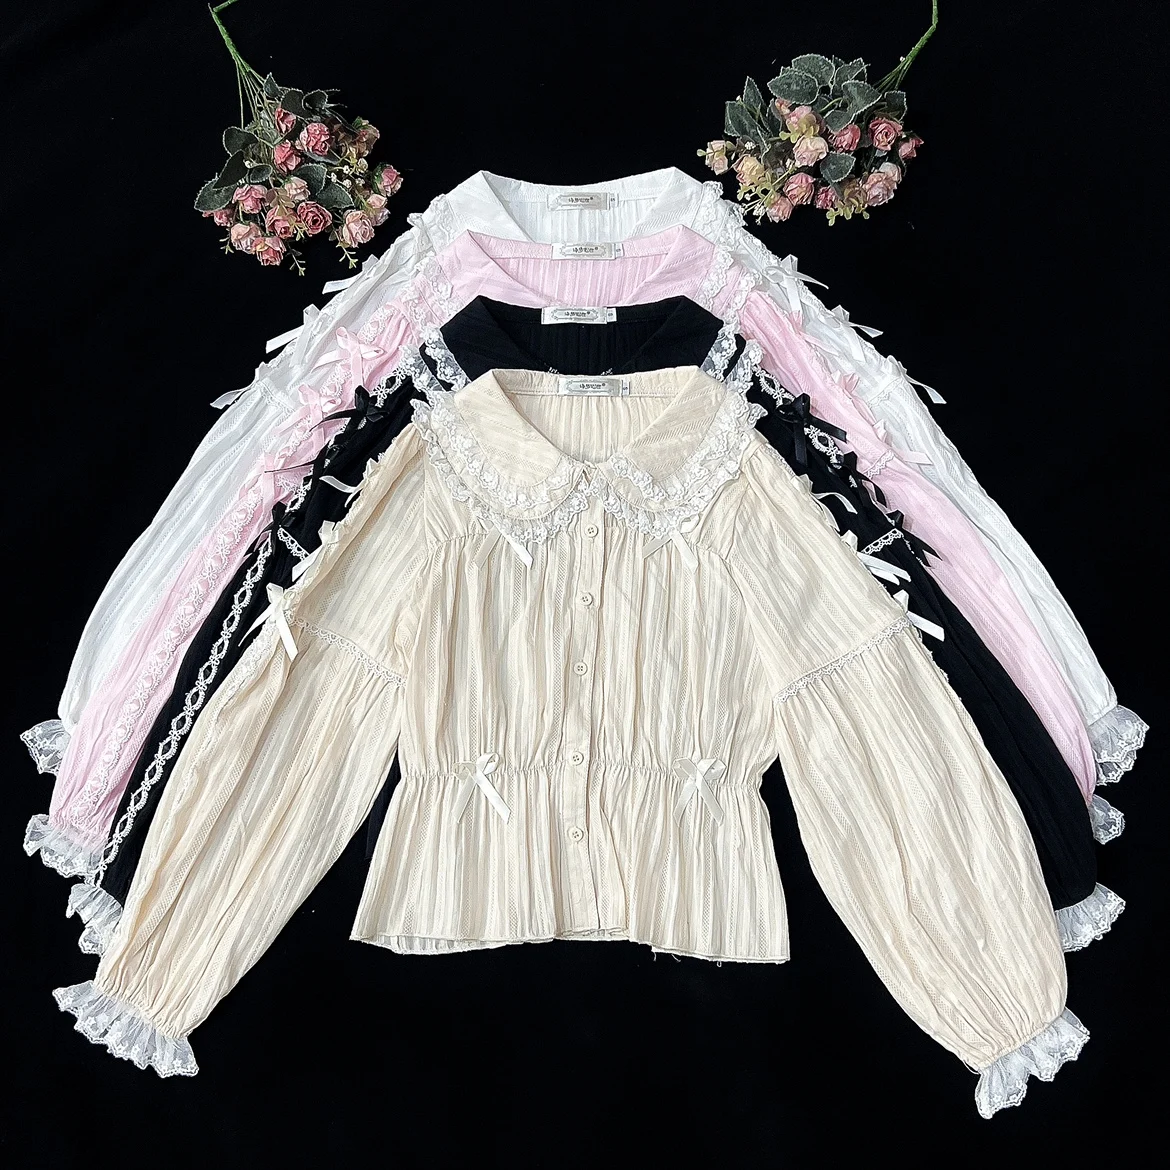 

Cotton Striped Fall Winter Women's Lolita Long Sleeve Peter Pan Collar Blouse Lace Trim Little Bows Cute Shirt